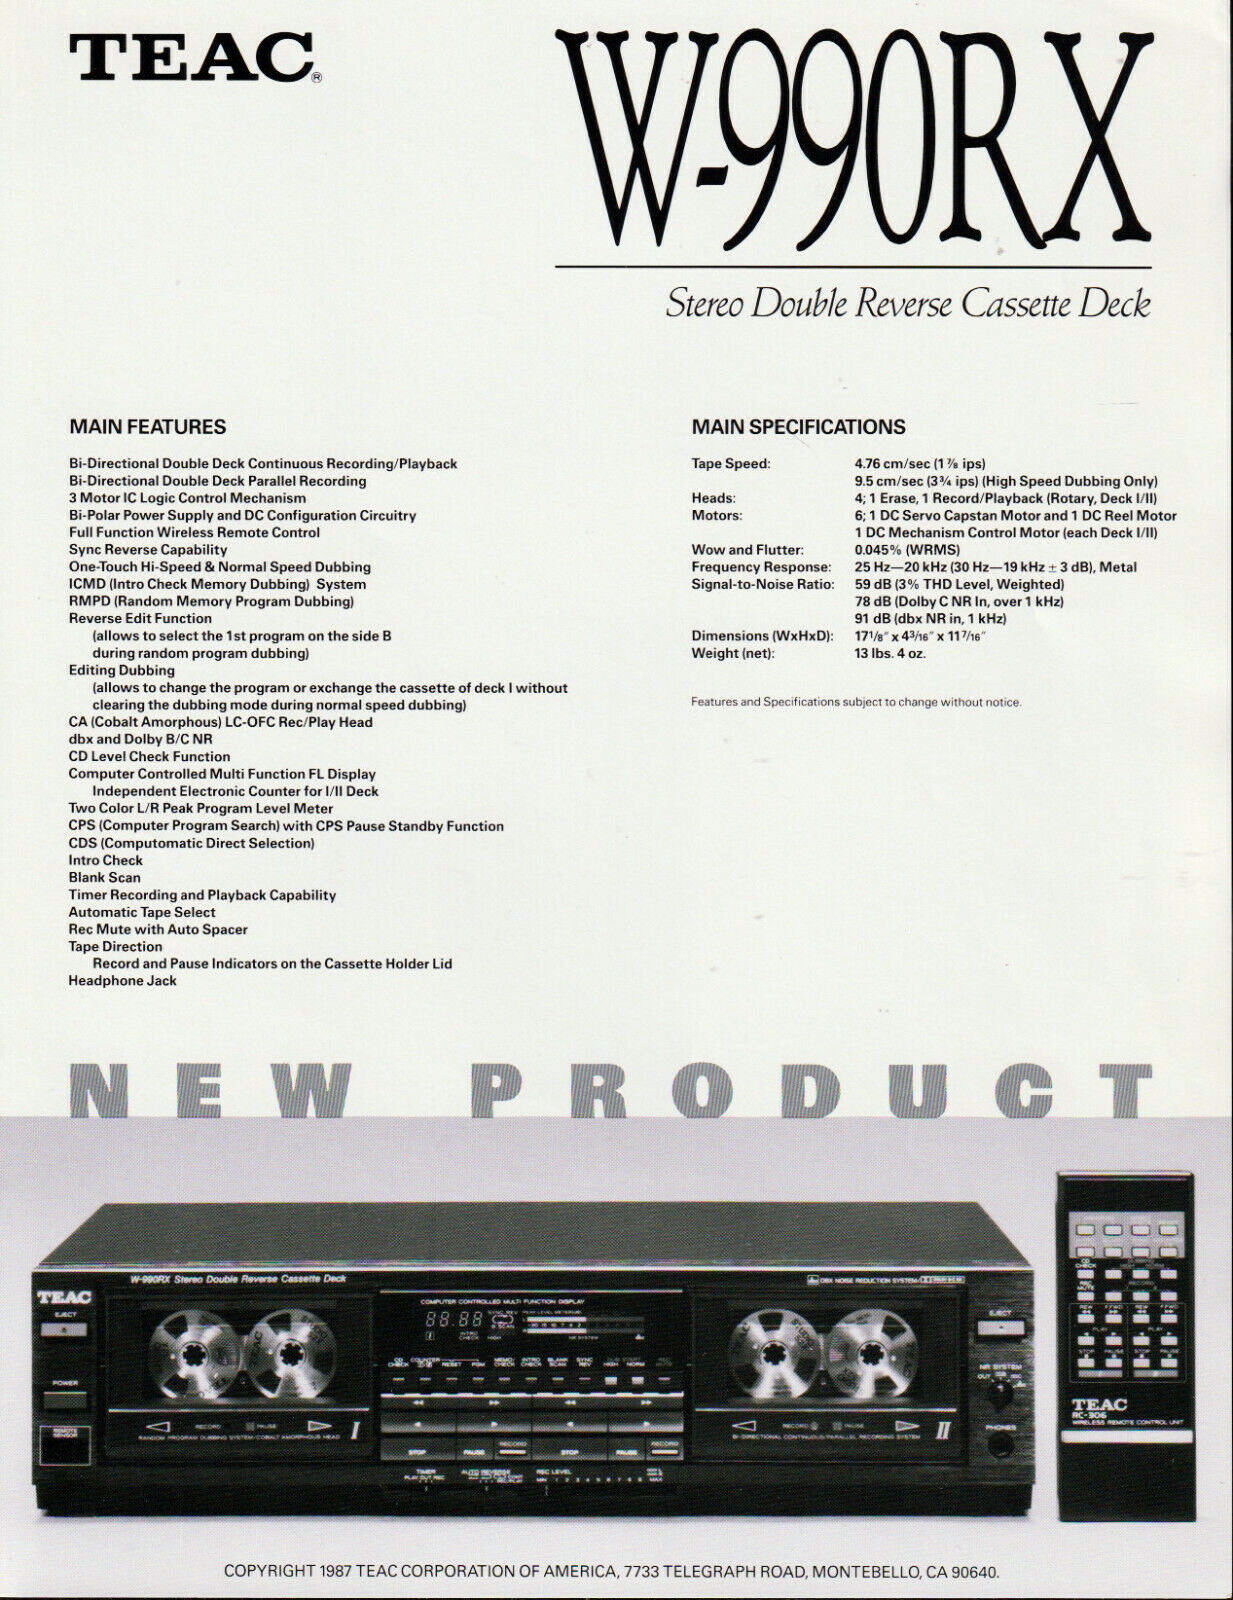 Teac W-990 RX-Prospekt-1988.jpg